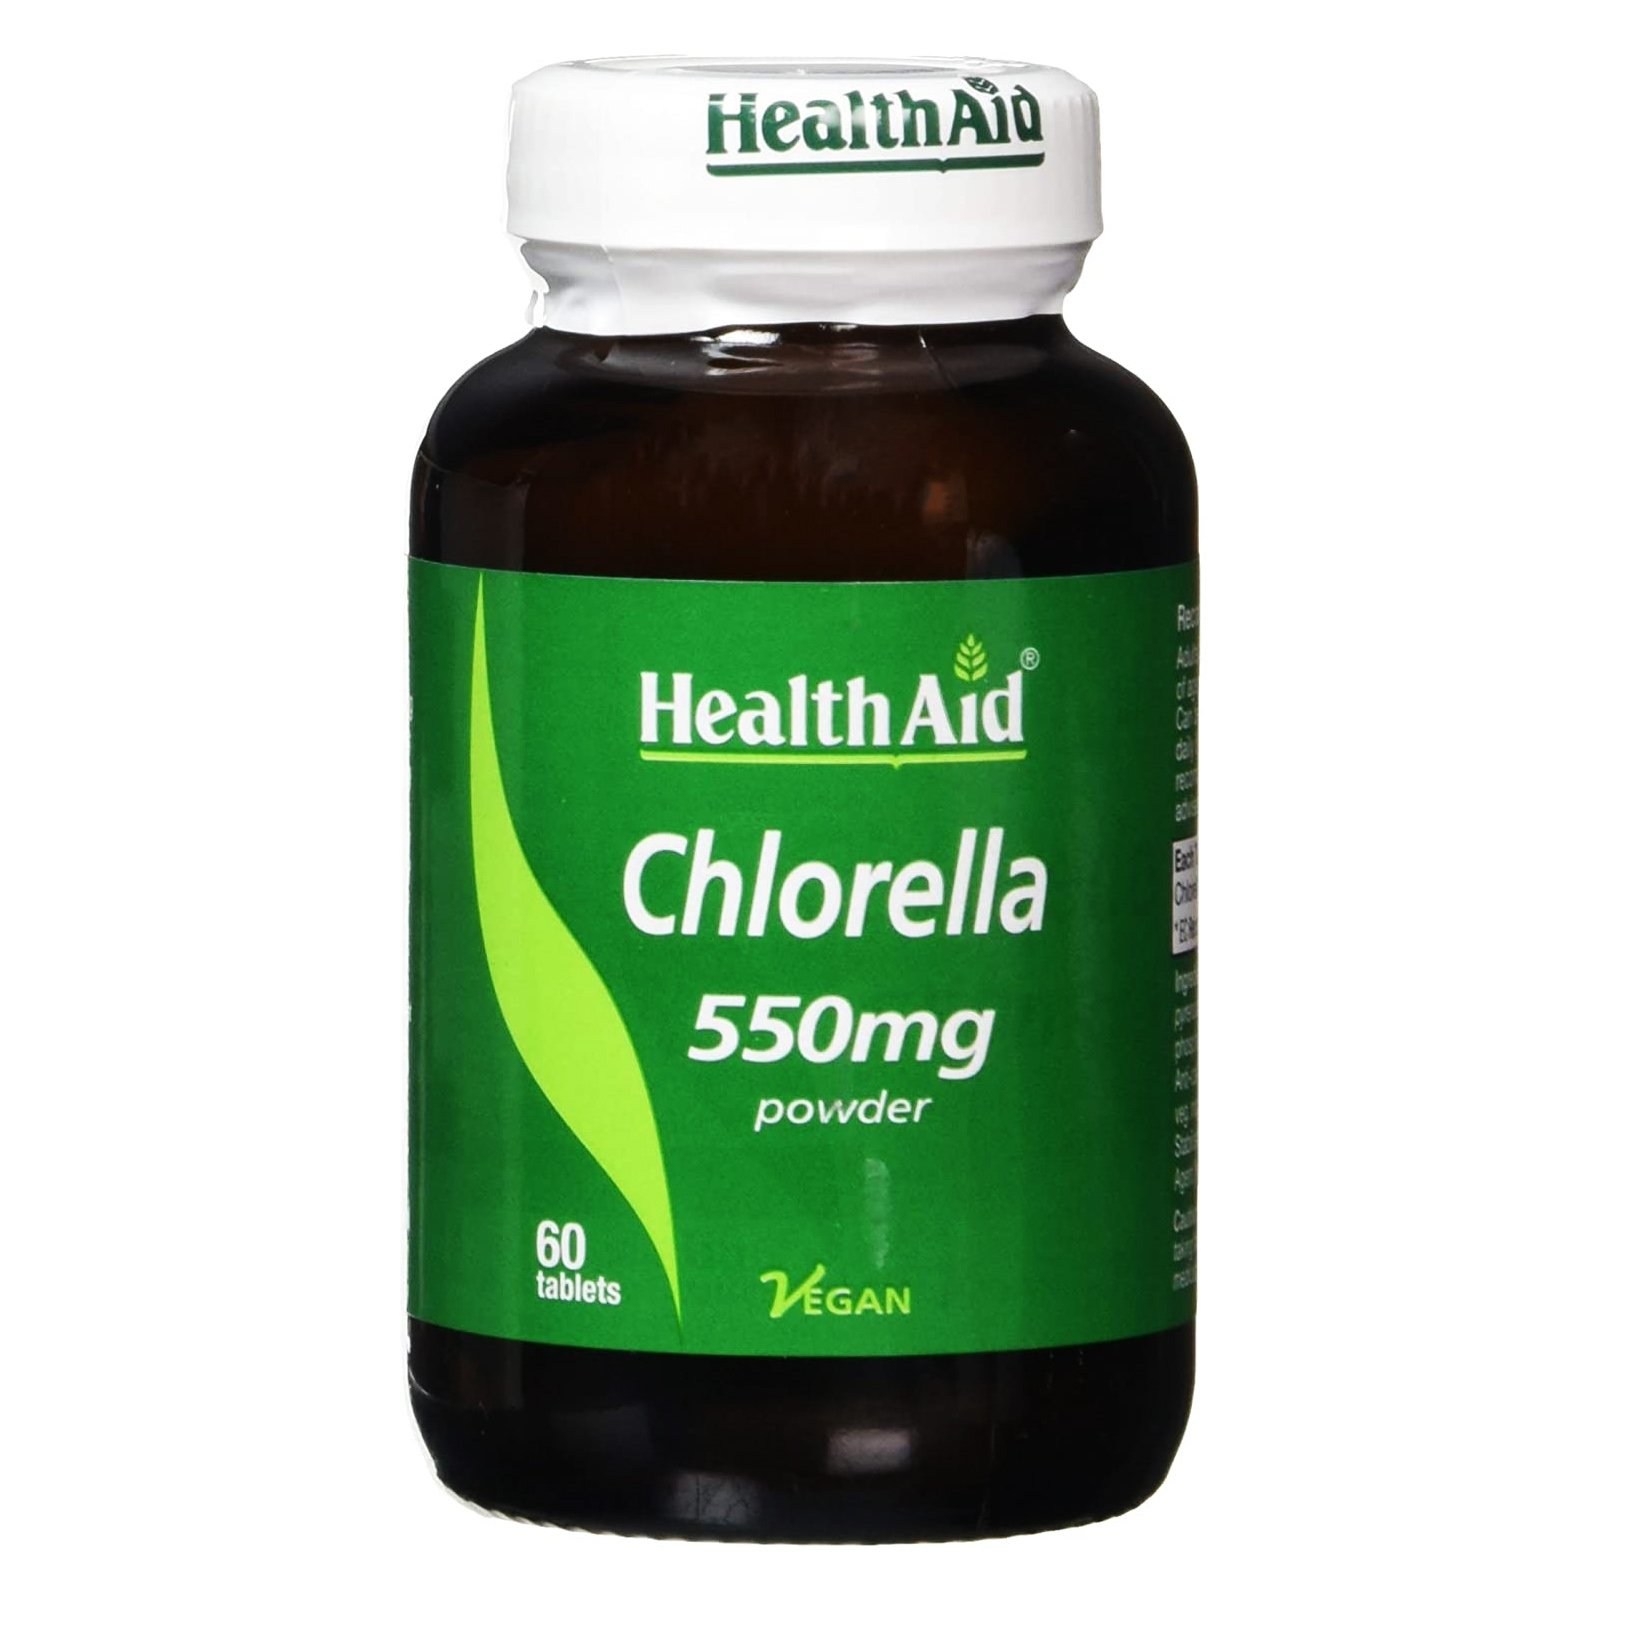 Health Aid Chlorella 550mg Πλούσιο σε Αμινοξέα Βιταμίνες και Μέταλλα Κυρίως Ασβέστιο, Φώσφορο και Σίδηρο 60tabs 8267